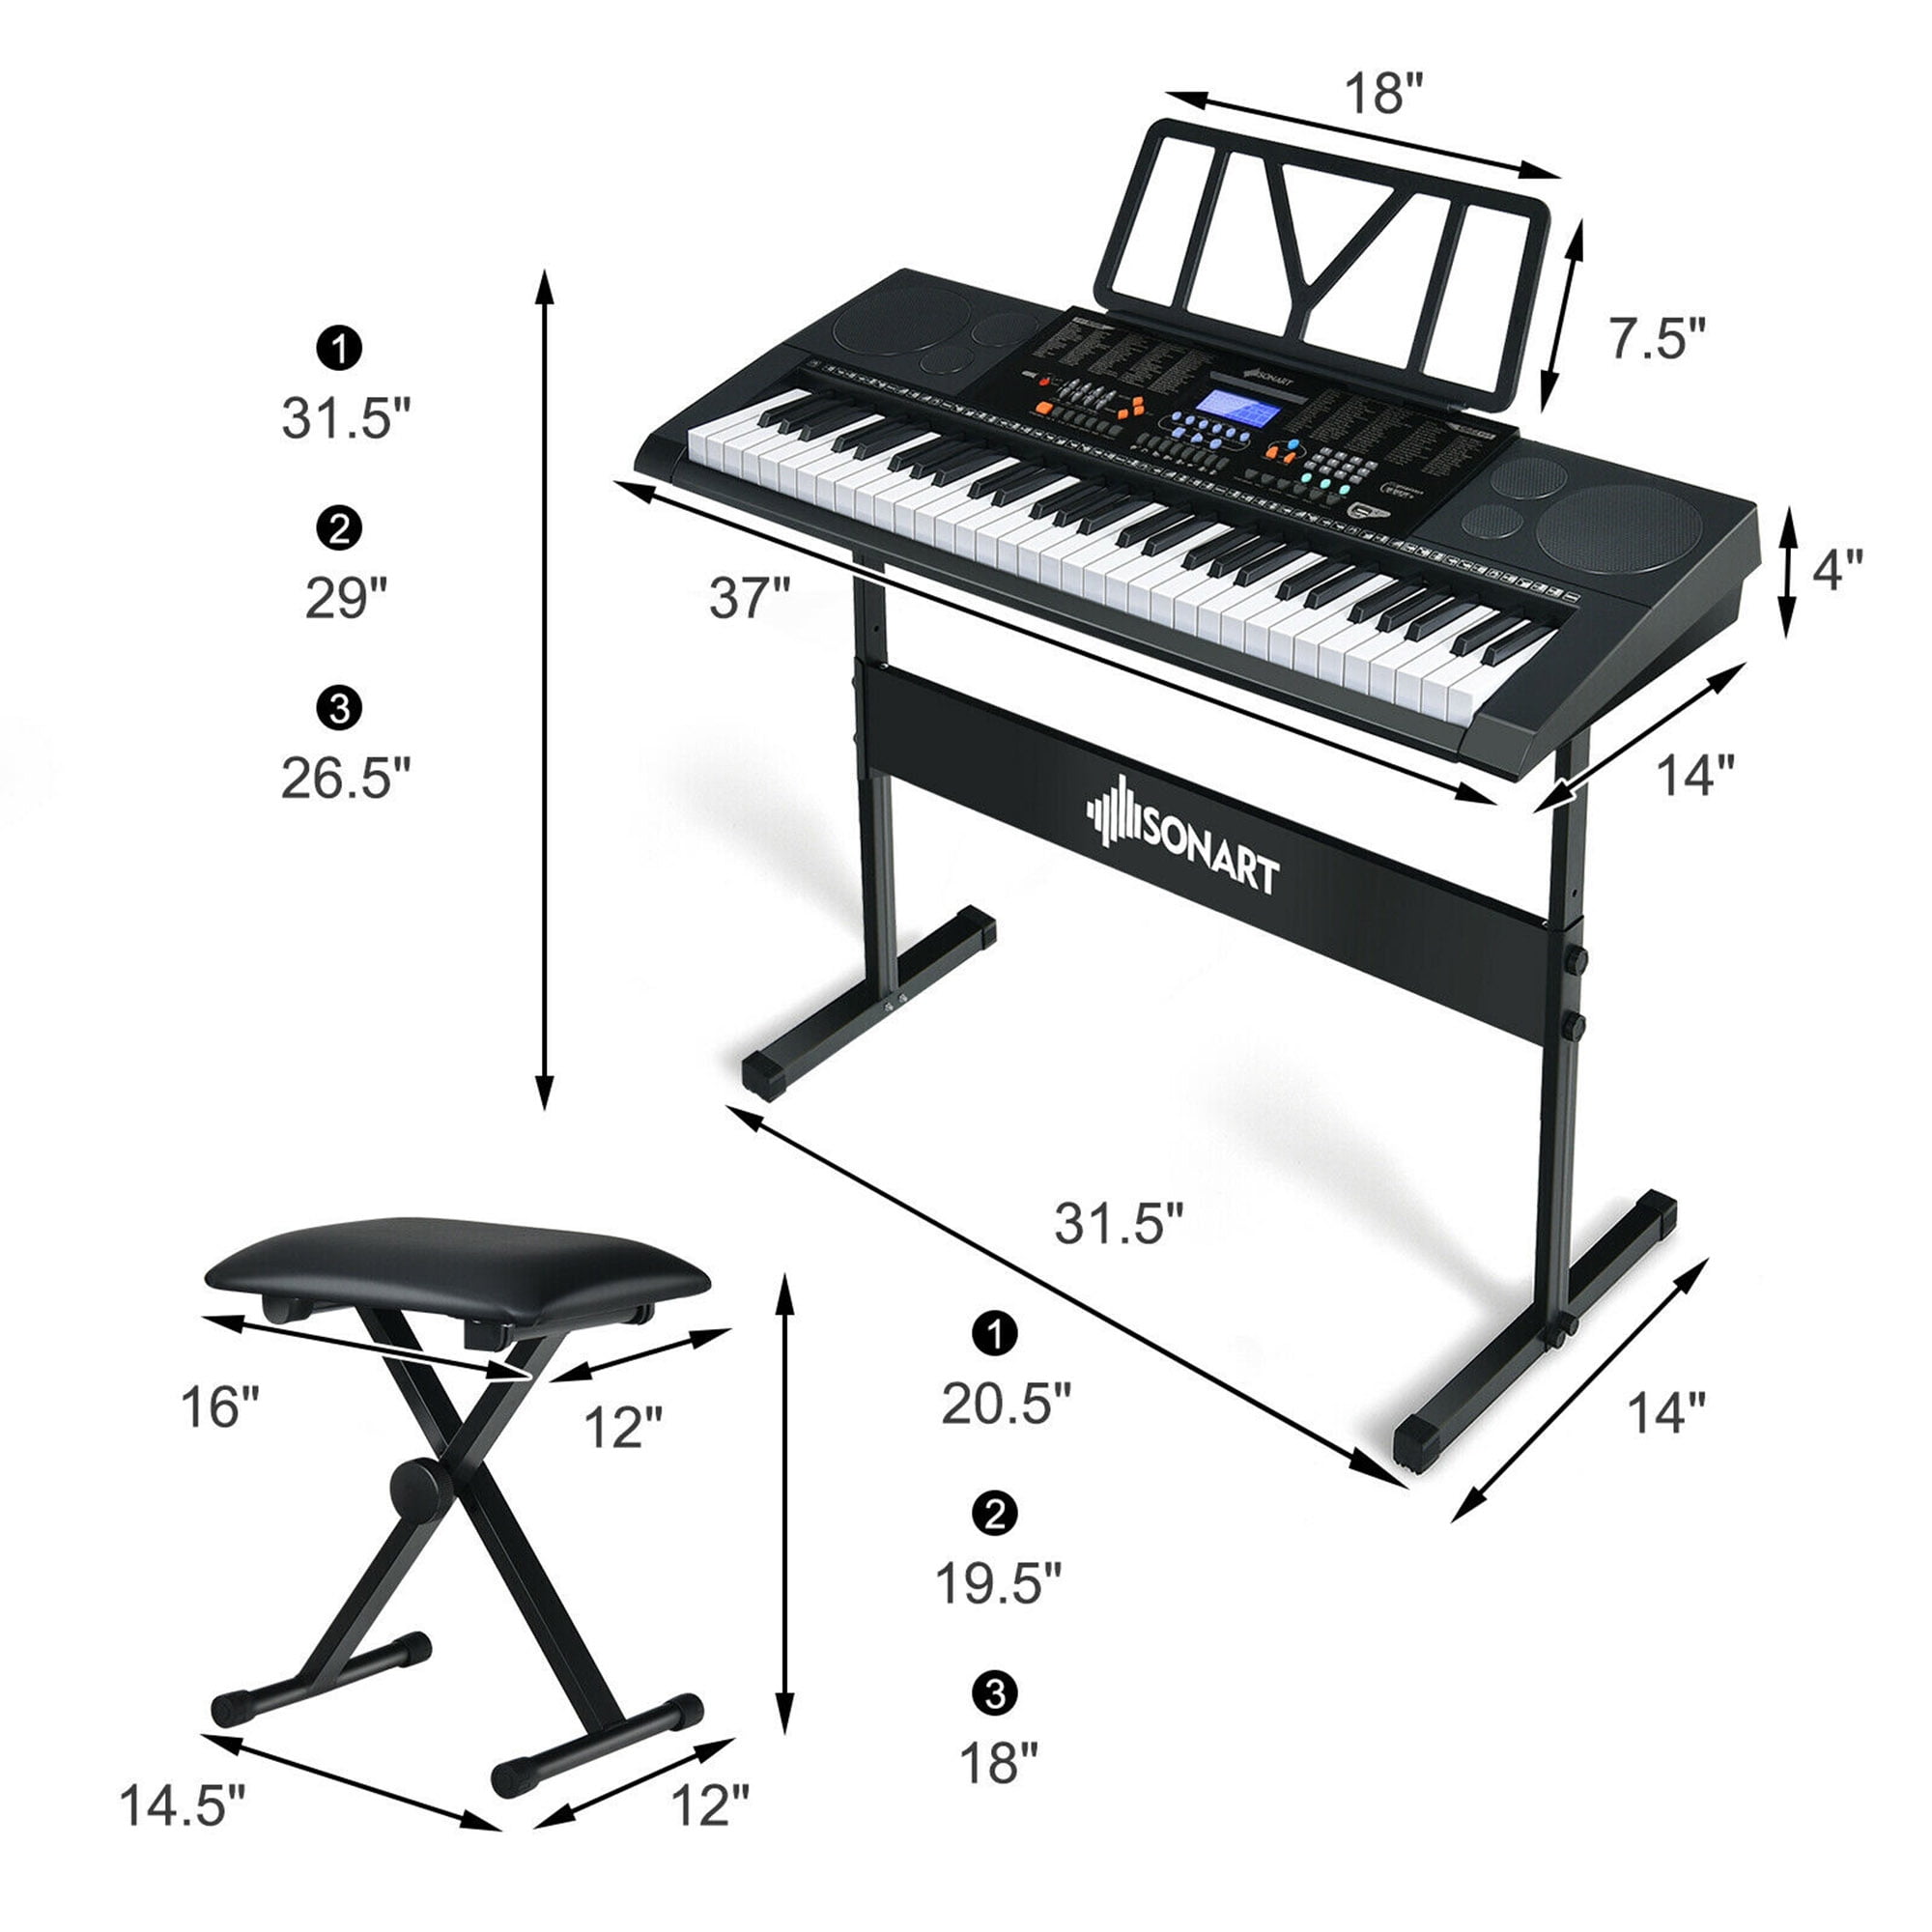 Adjustable Pro X Frame Piano Stool Keyboard Bench Keyboard Stand Music Stand UK 